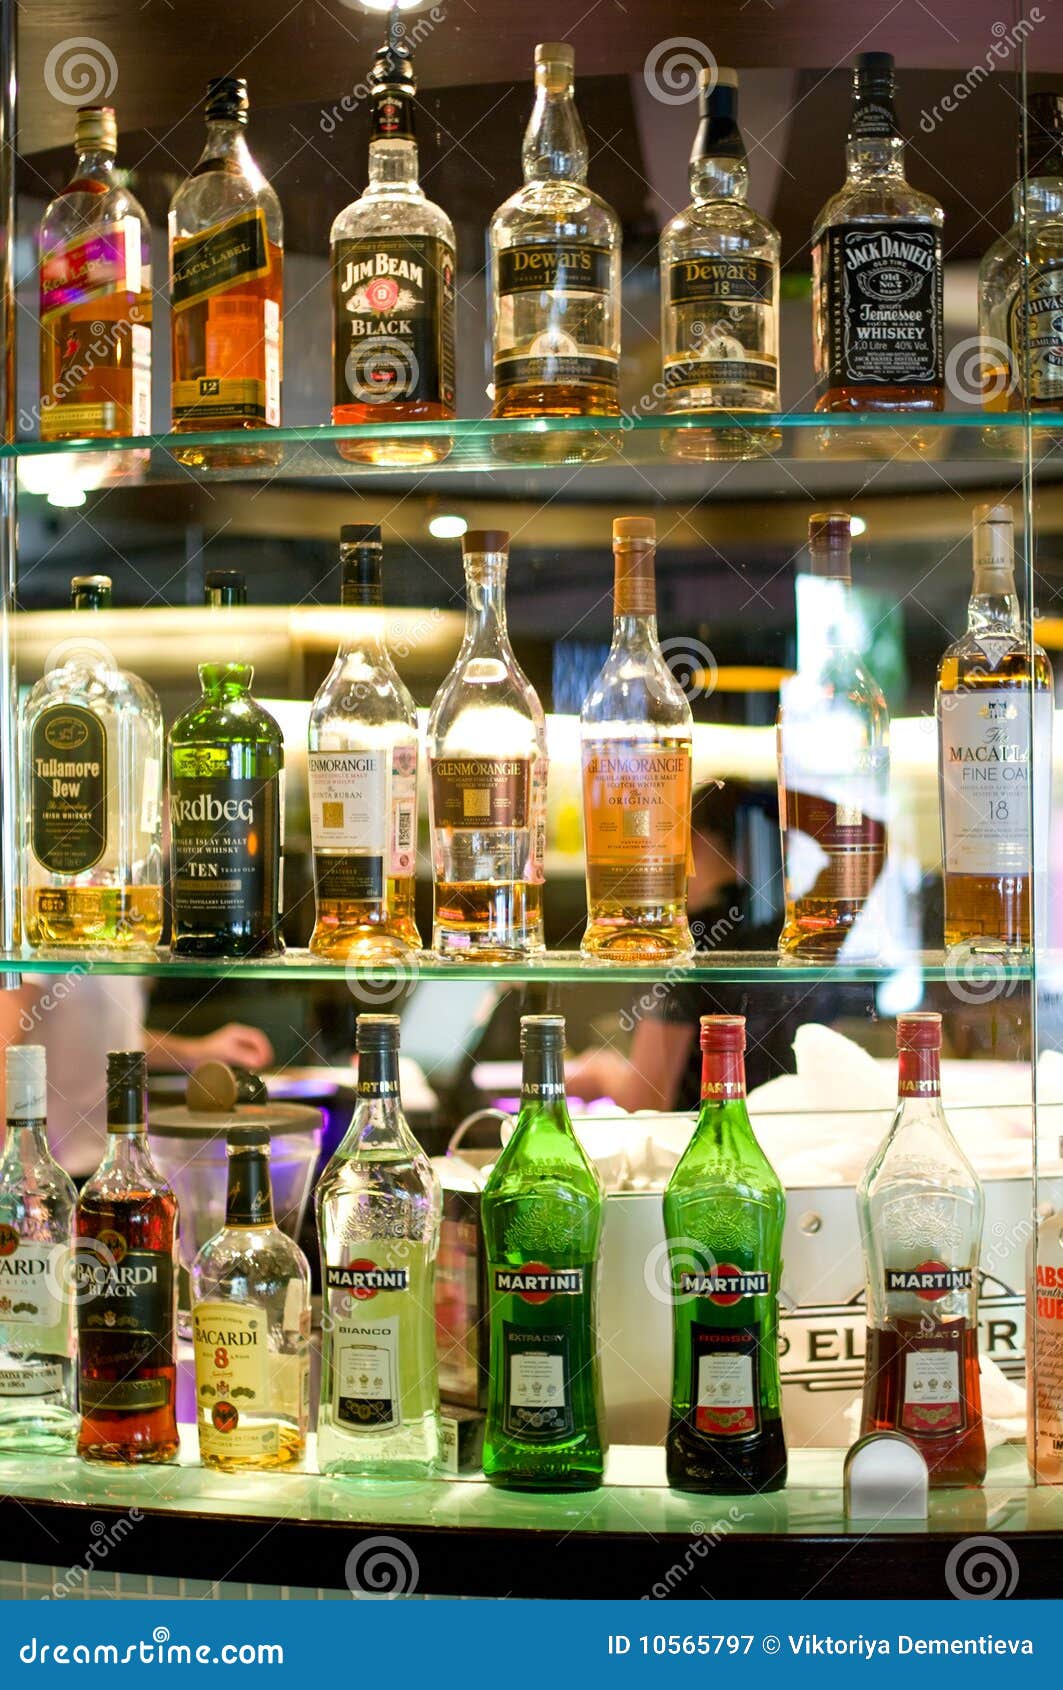 bottles of spirits and liquor at the bar